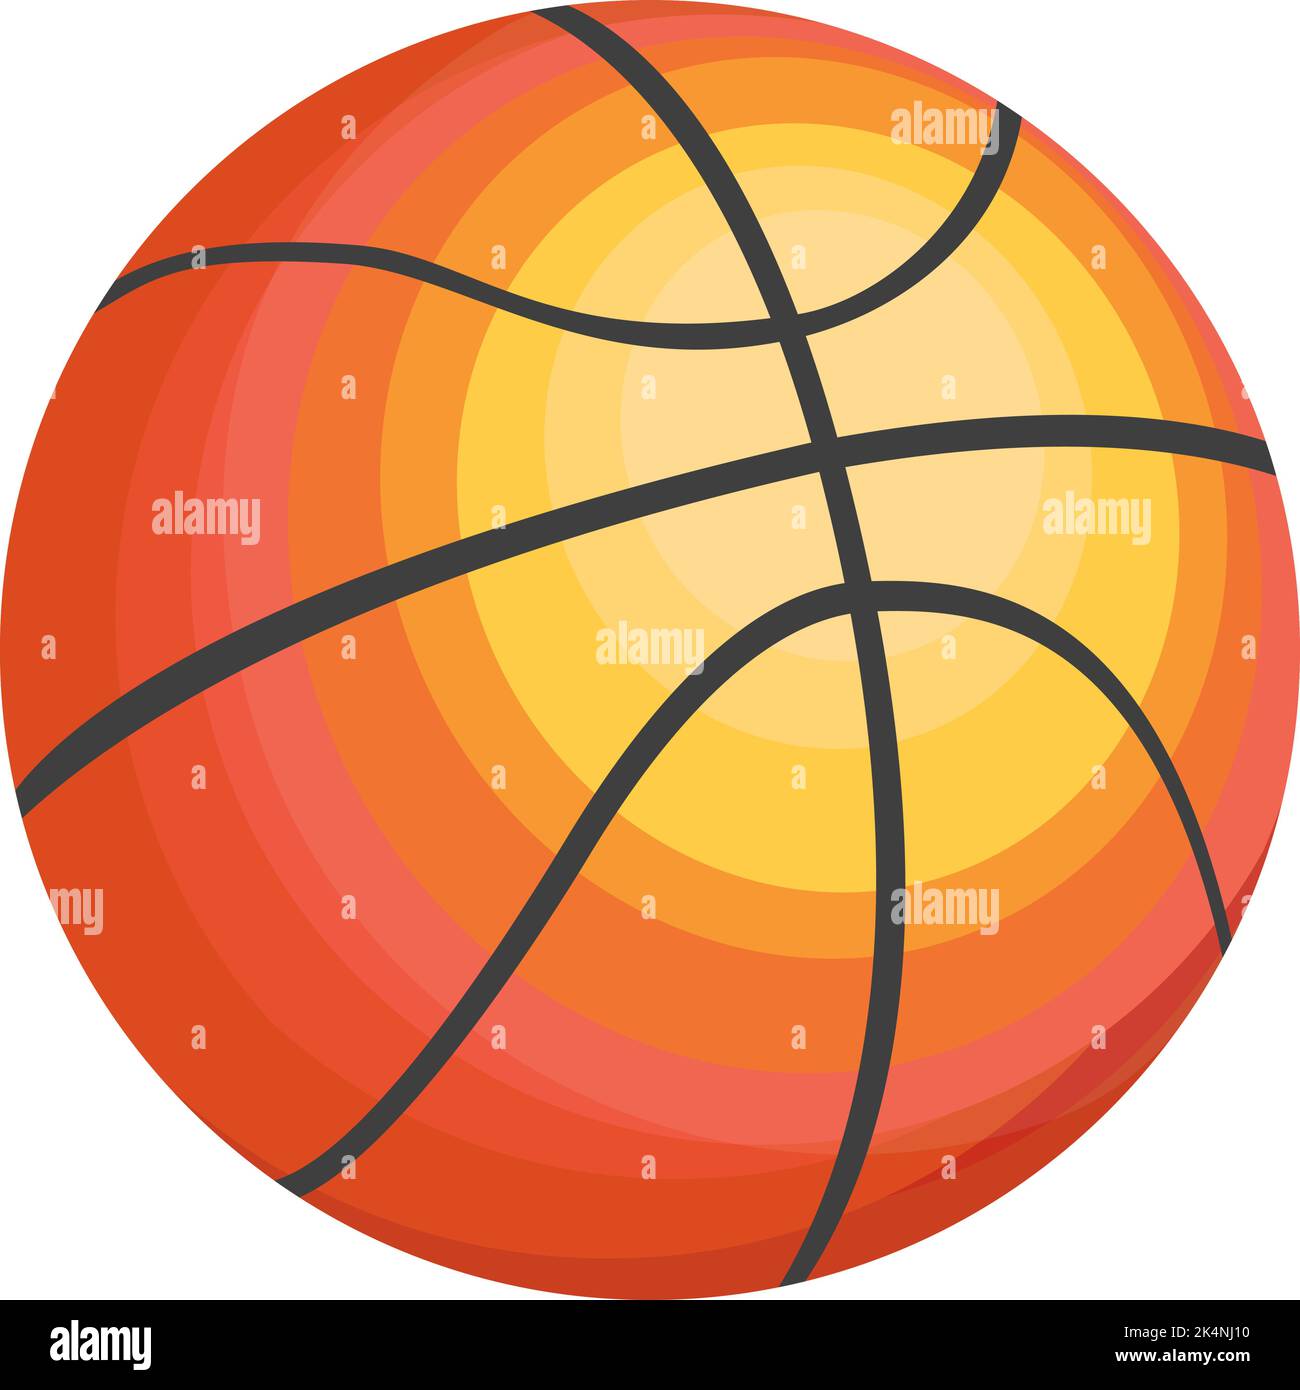 Ballon de basket-ball extérieur, illustration, vecteur sur fond blanc. Illustration de Vecteur